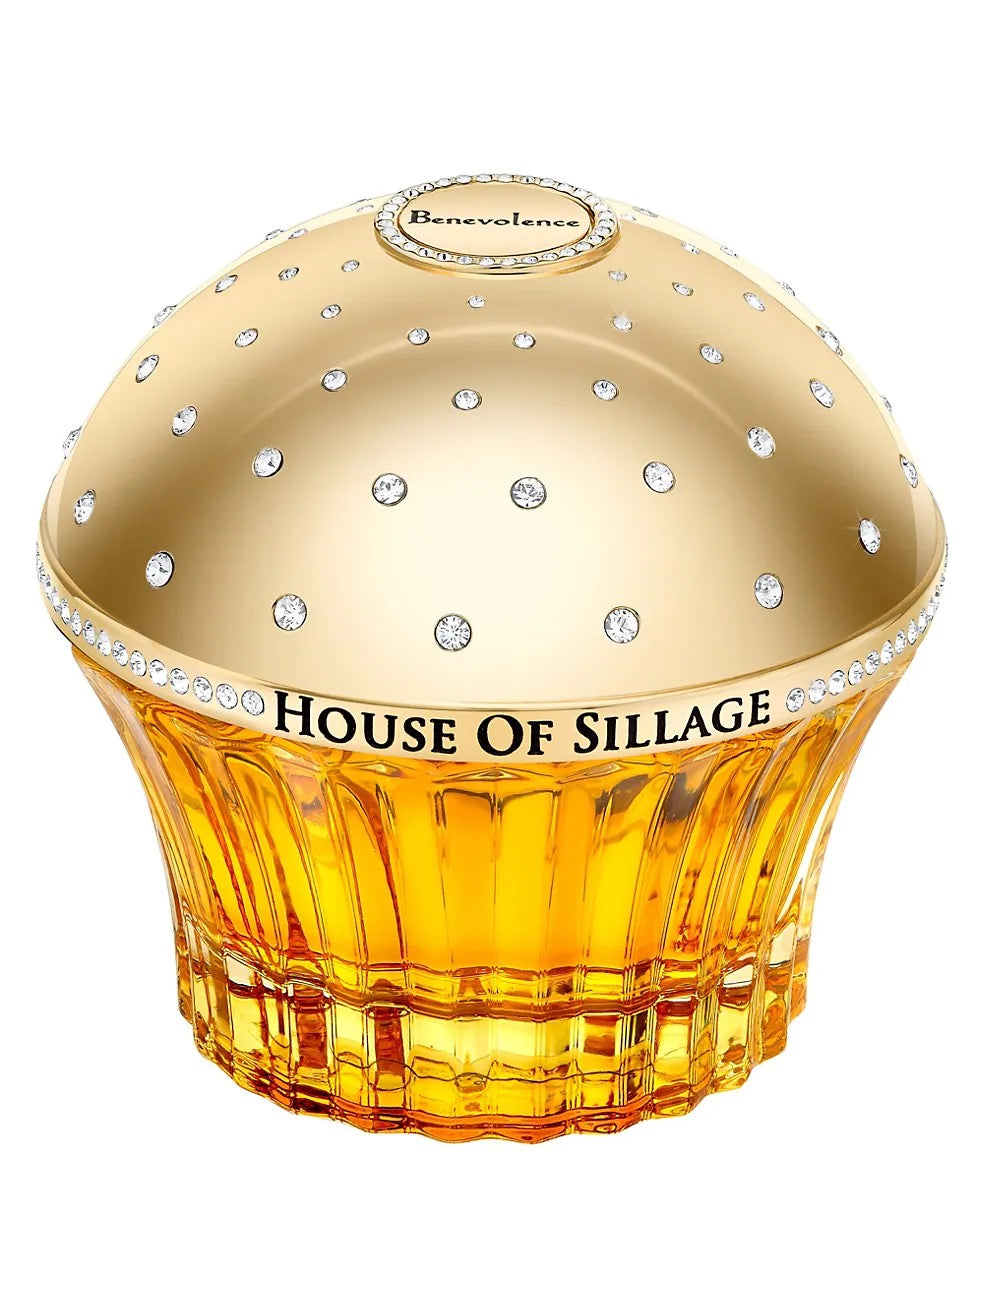 House of Sillage- Benevolence